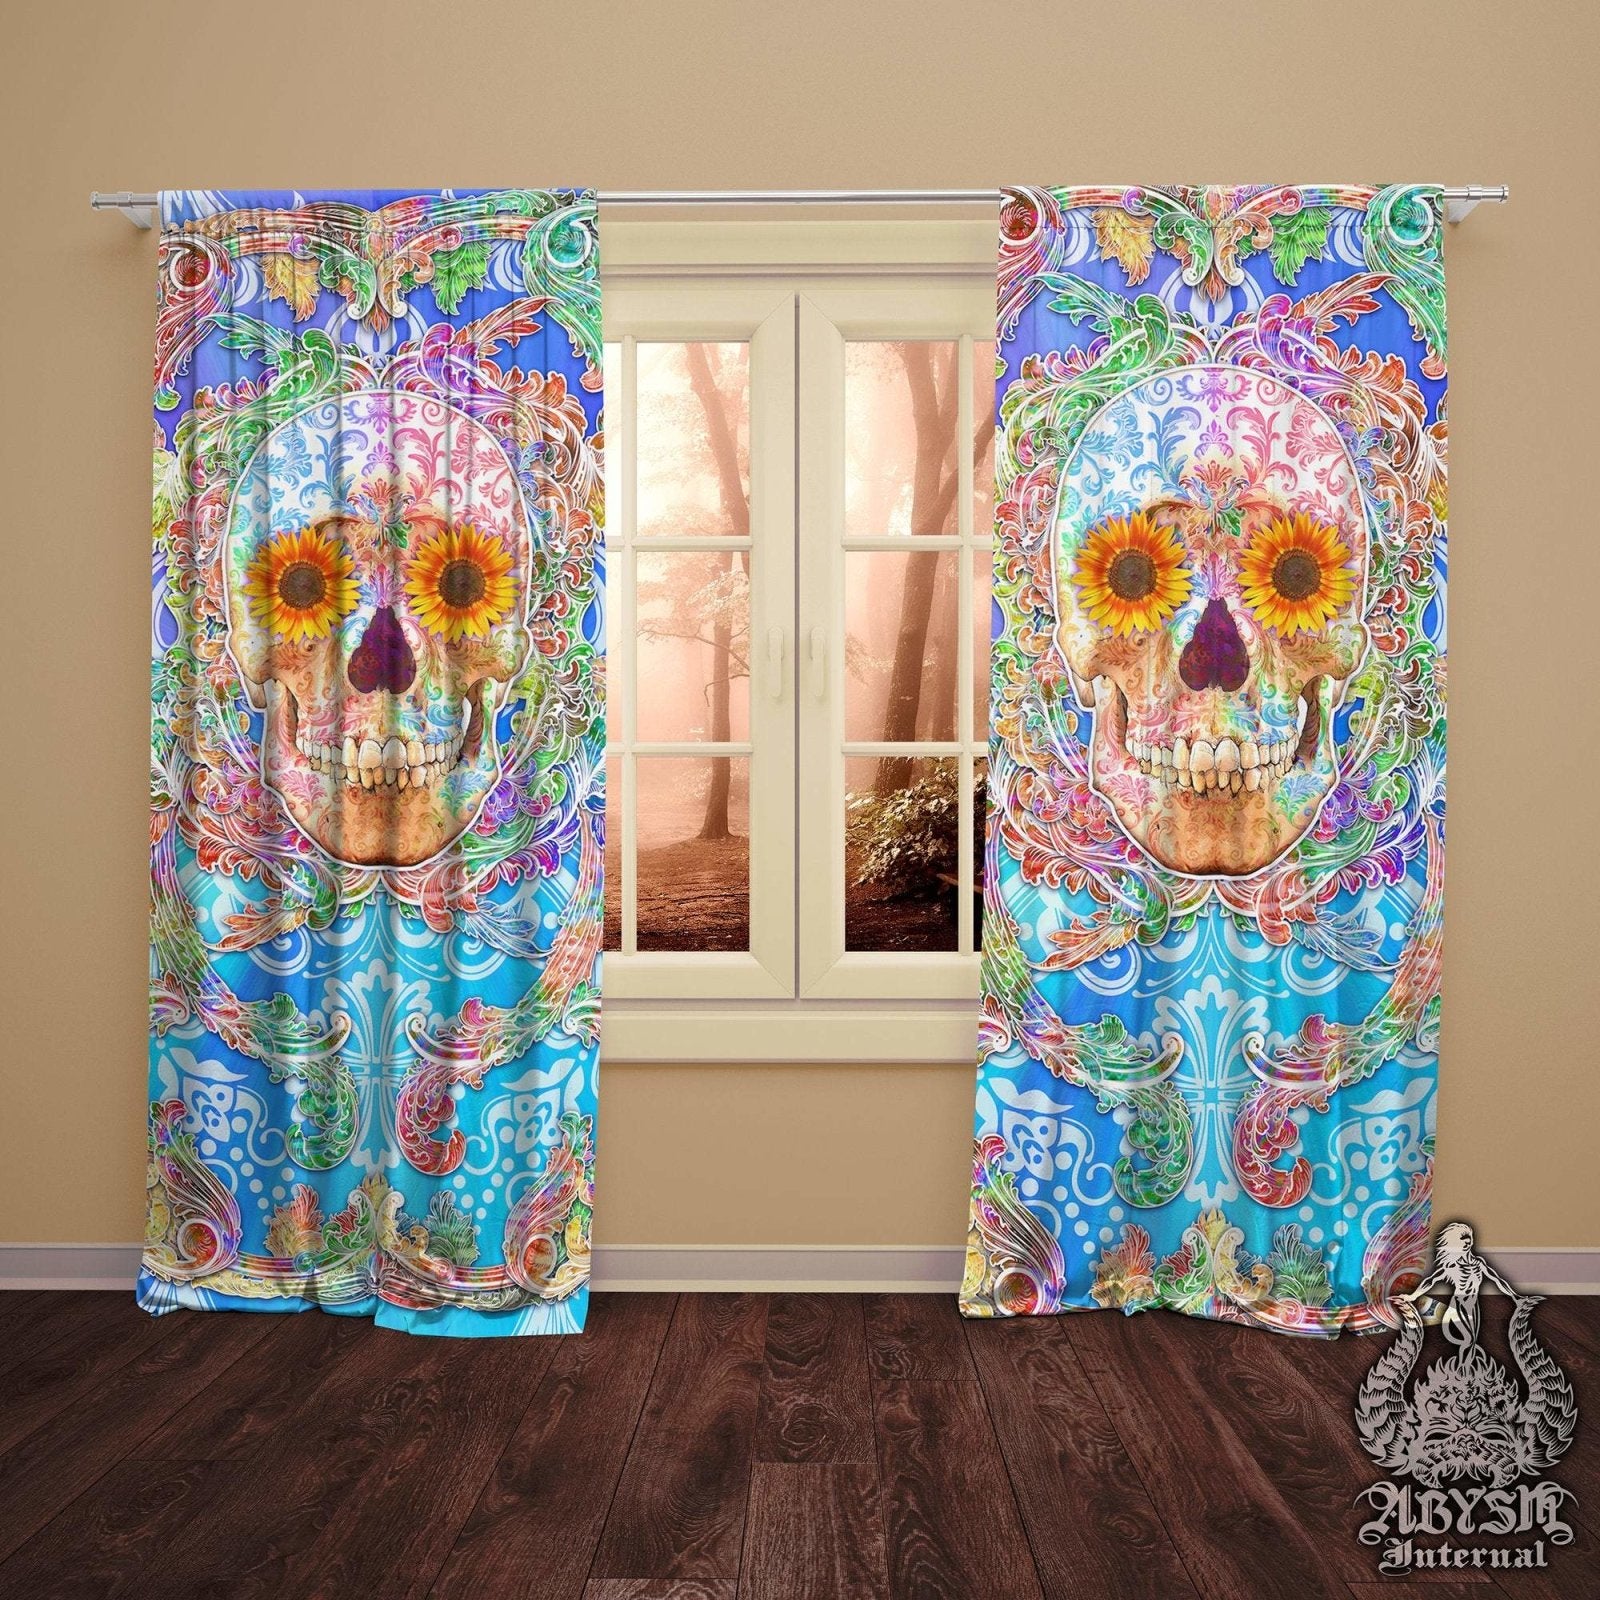 Boho Blackout Curtains, Long Window Panels, Sugar Skull Art Print, Festive Summer Decor - Psy Color with Flowers - Abysm Internal